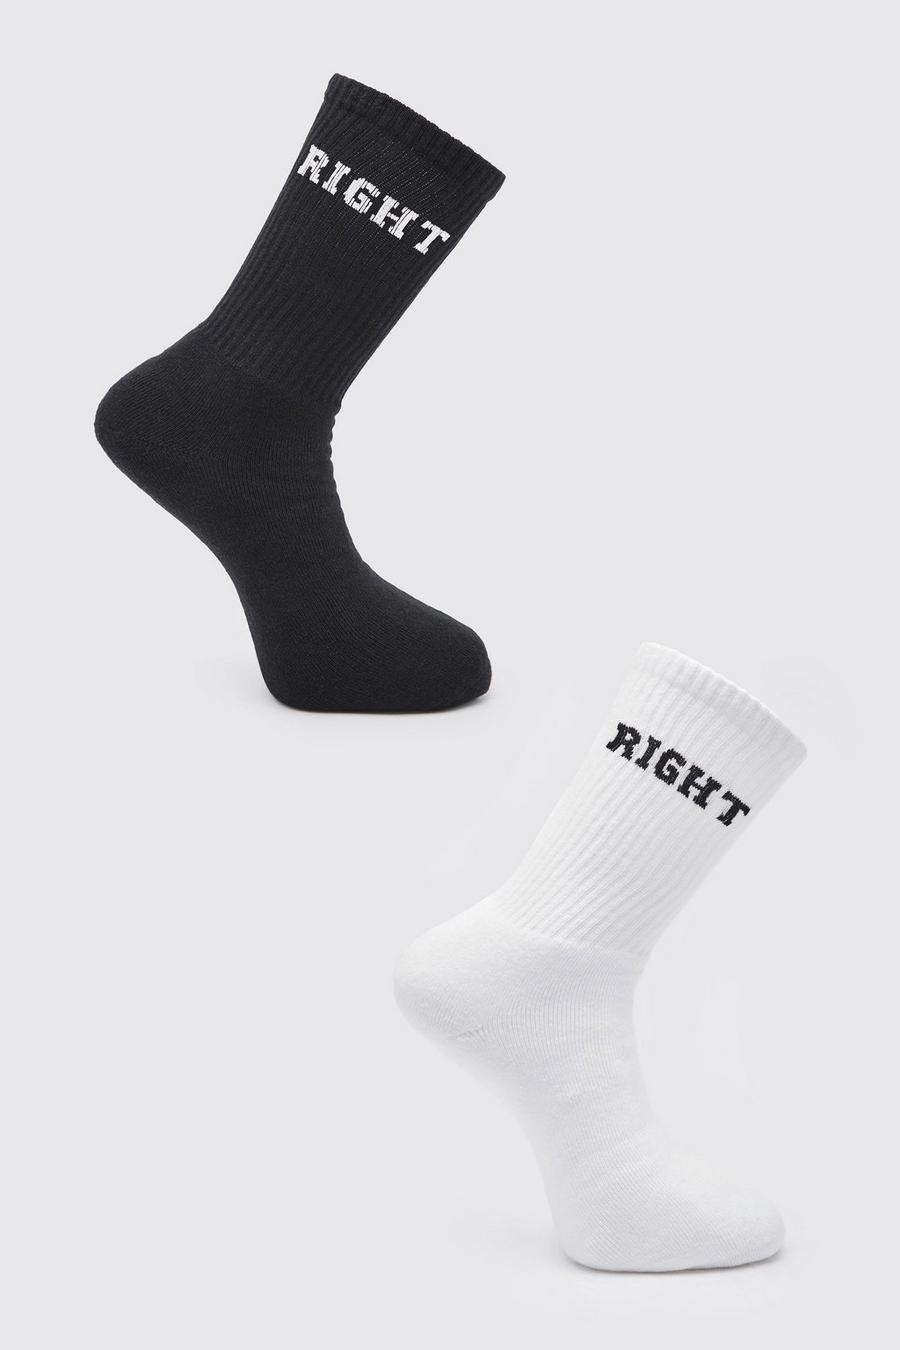 Black 2 Pack Left Right Socks image number 1